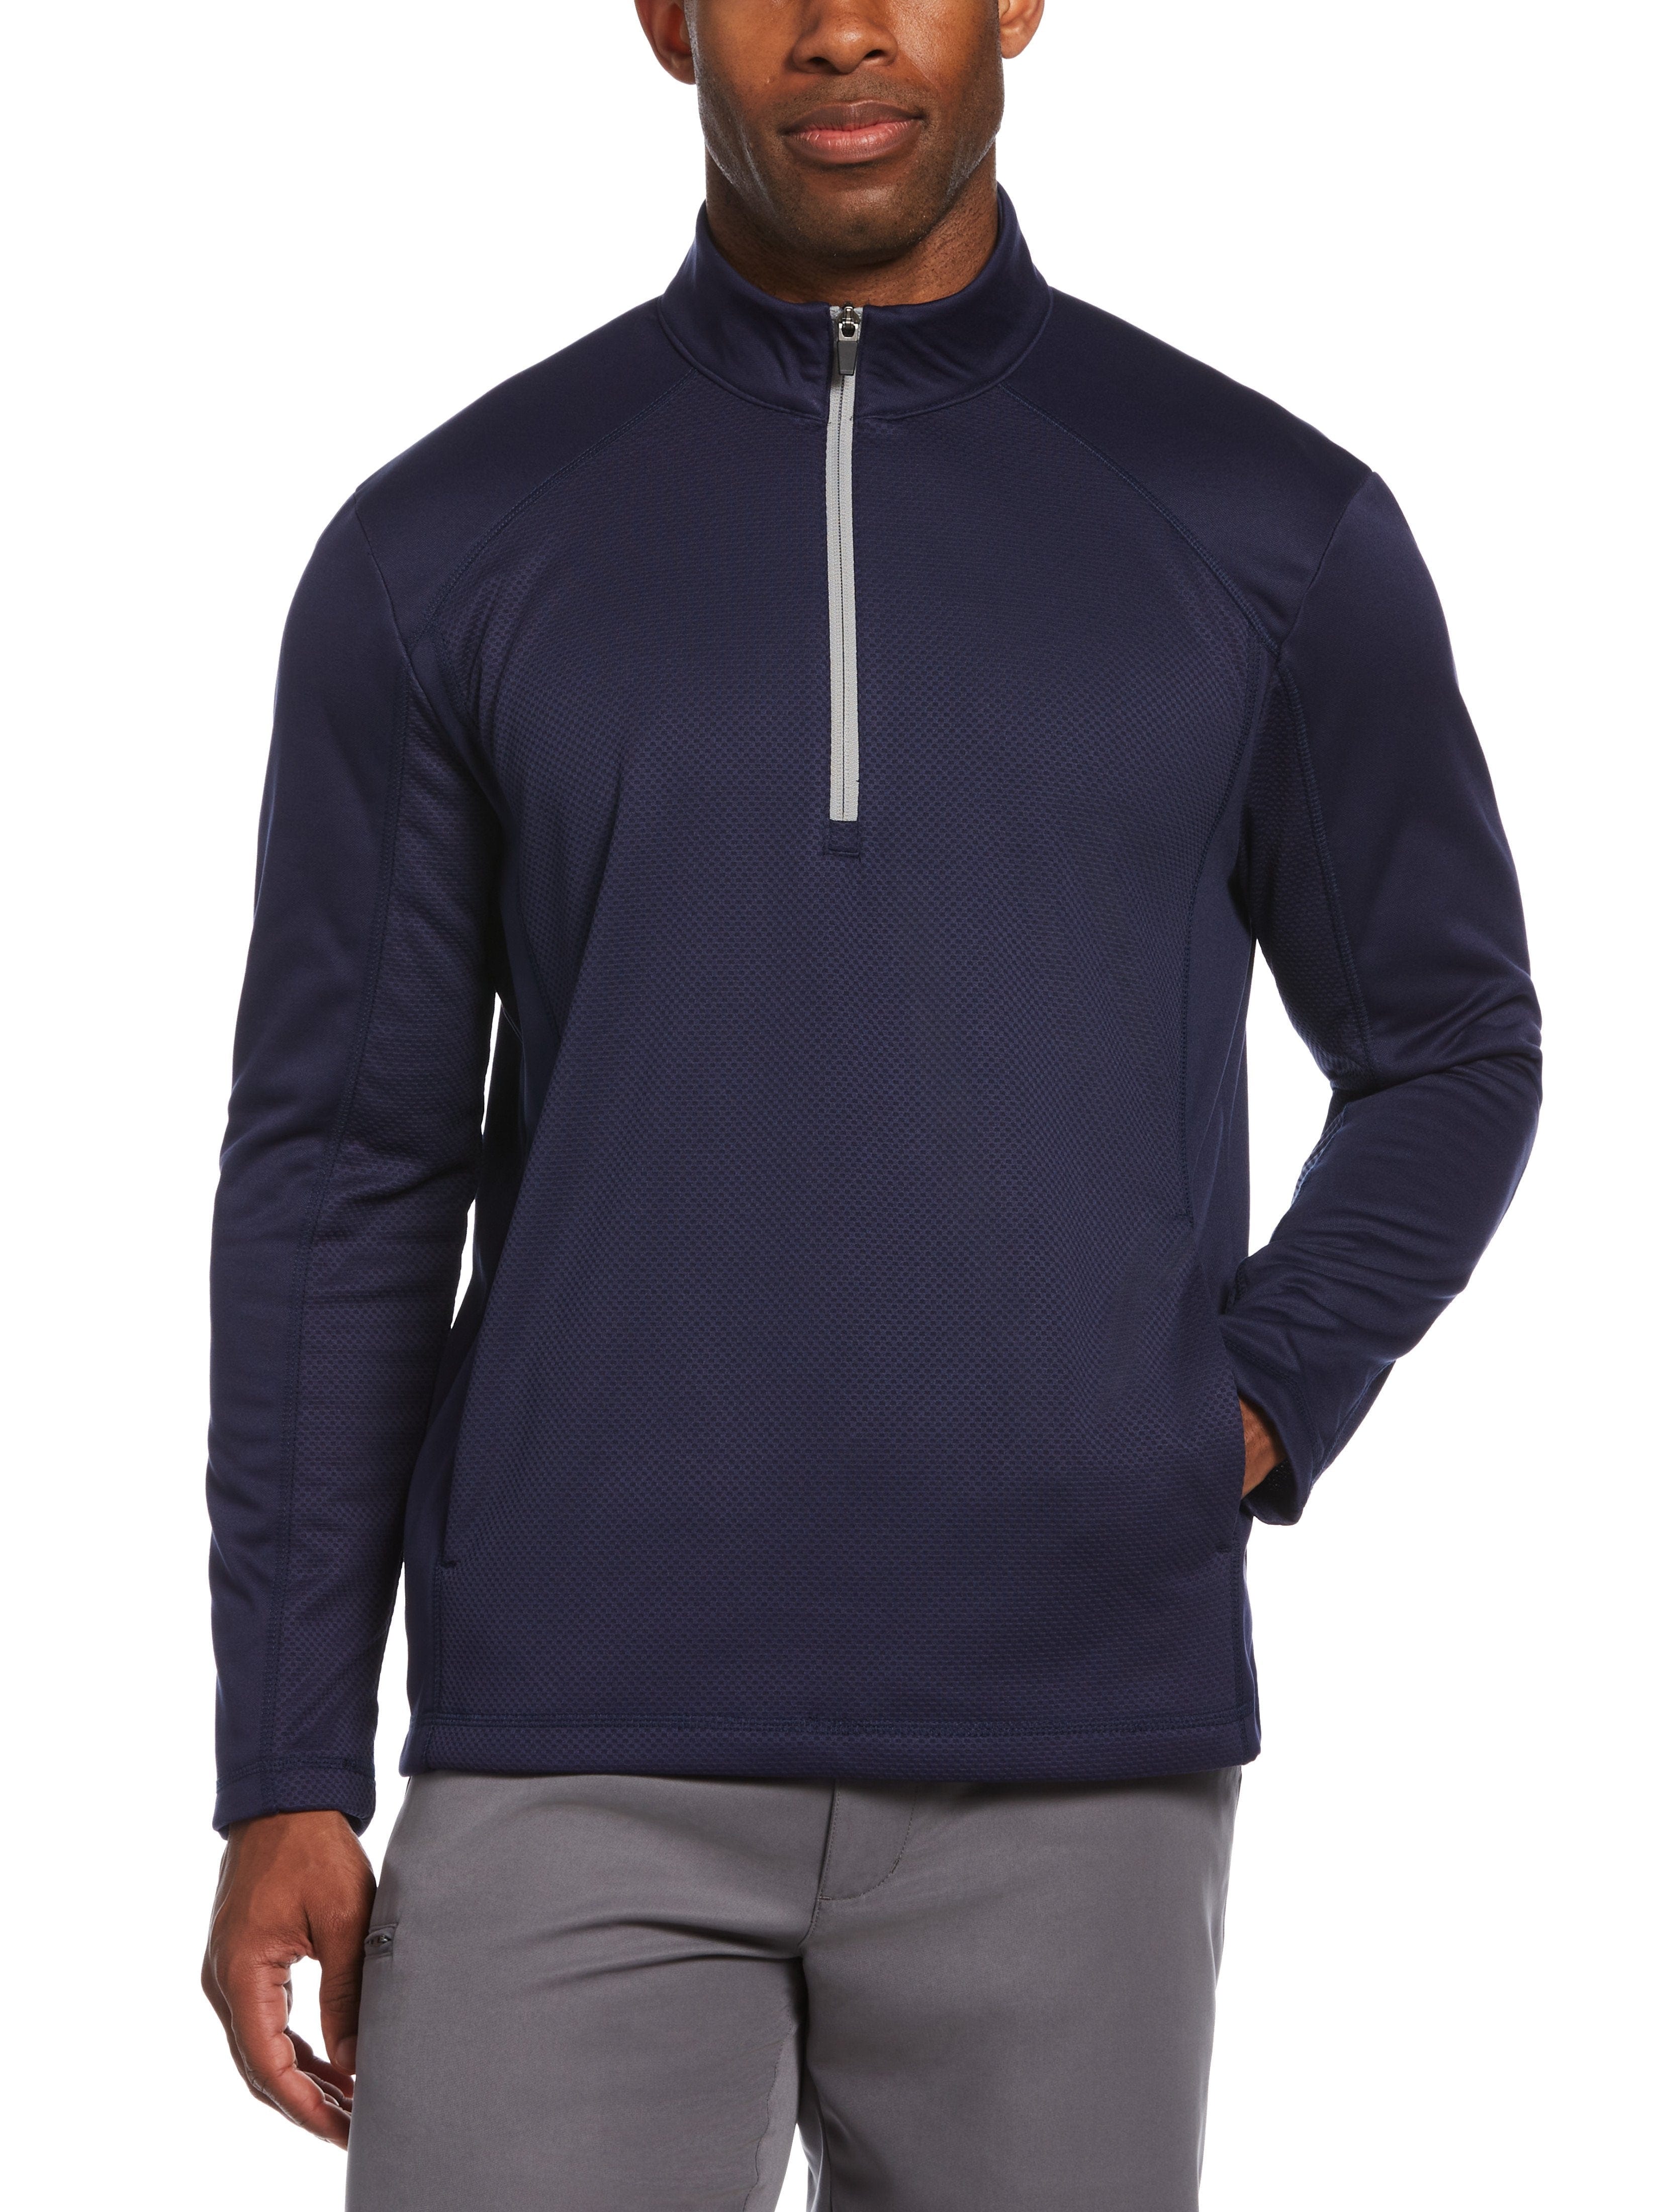 PGA TOUR Apparel Mens Mixed Texture Fleece 1/4 Zip Golf Jacket Top, Size Medium, Navy Blue, 100% Polyester | Golf Apparel Shop